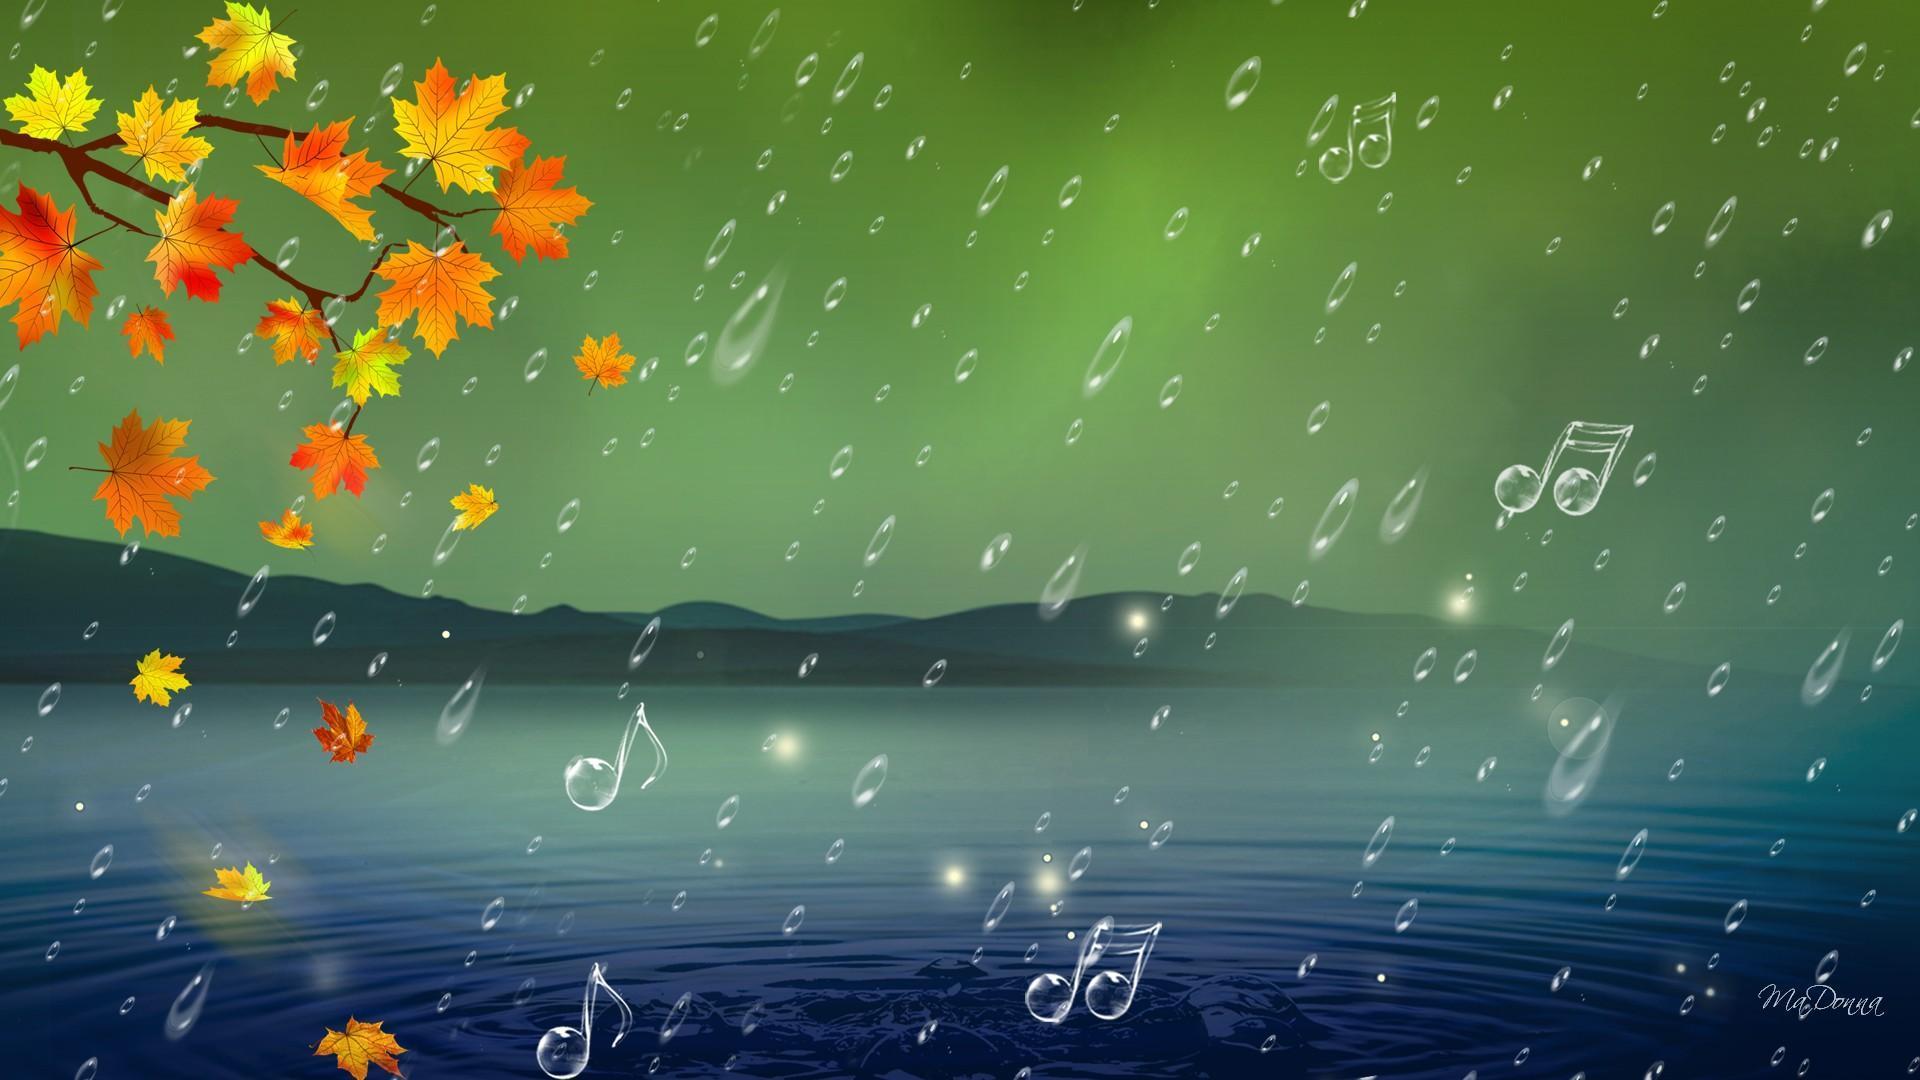 Music Notes Wallpaper Autumn Rain. Foolhardi